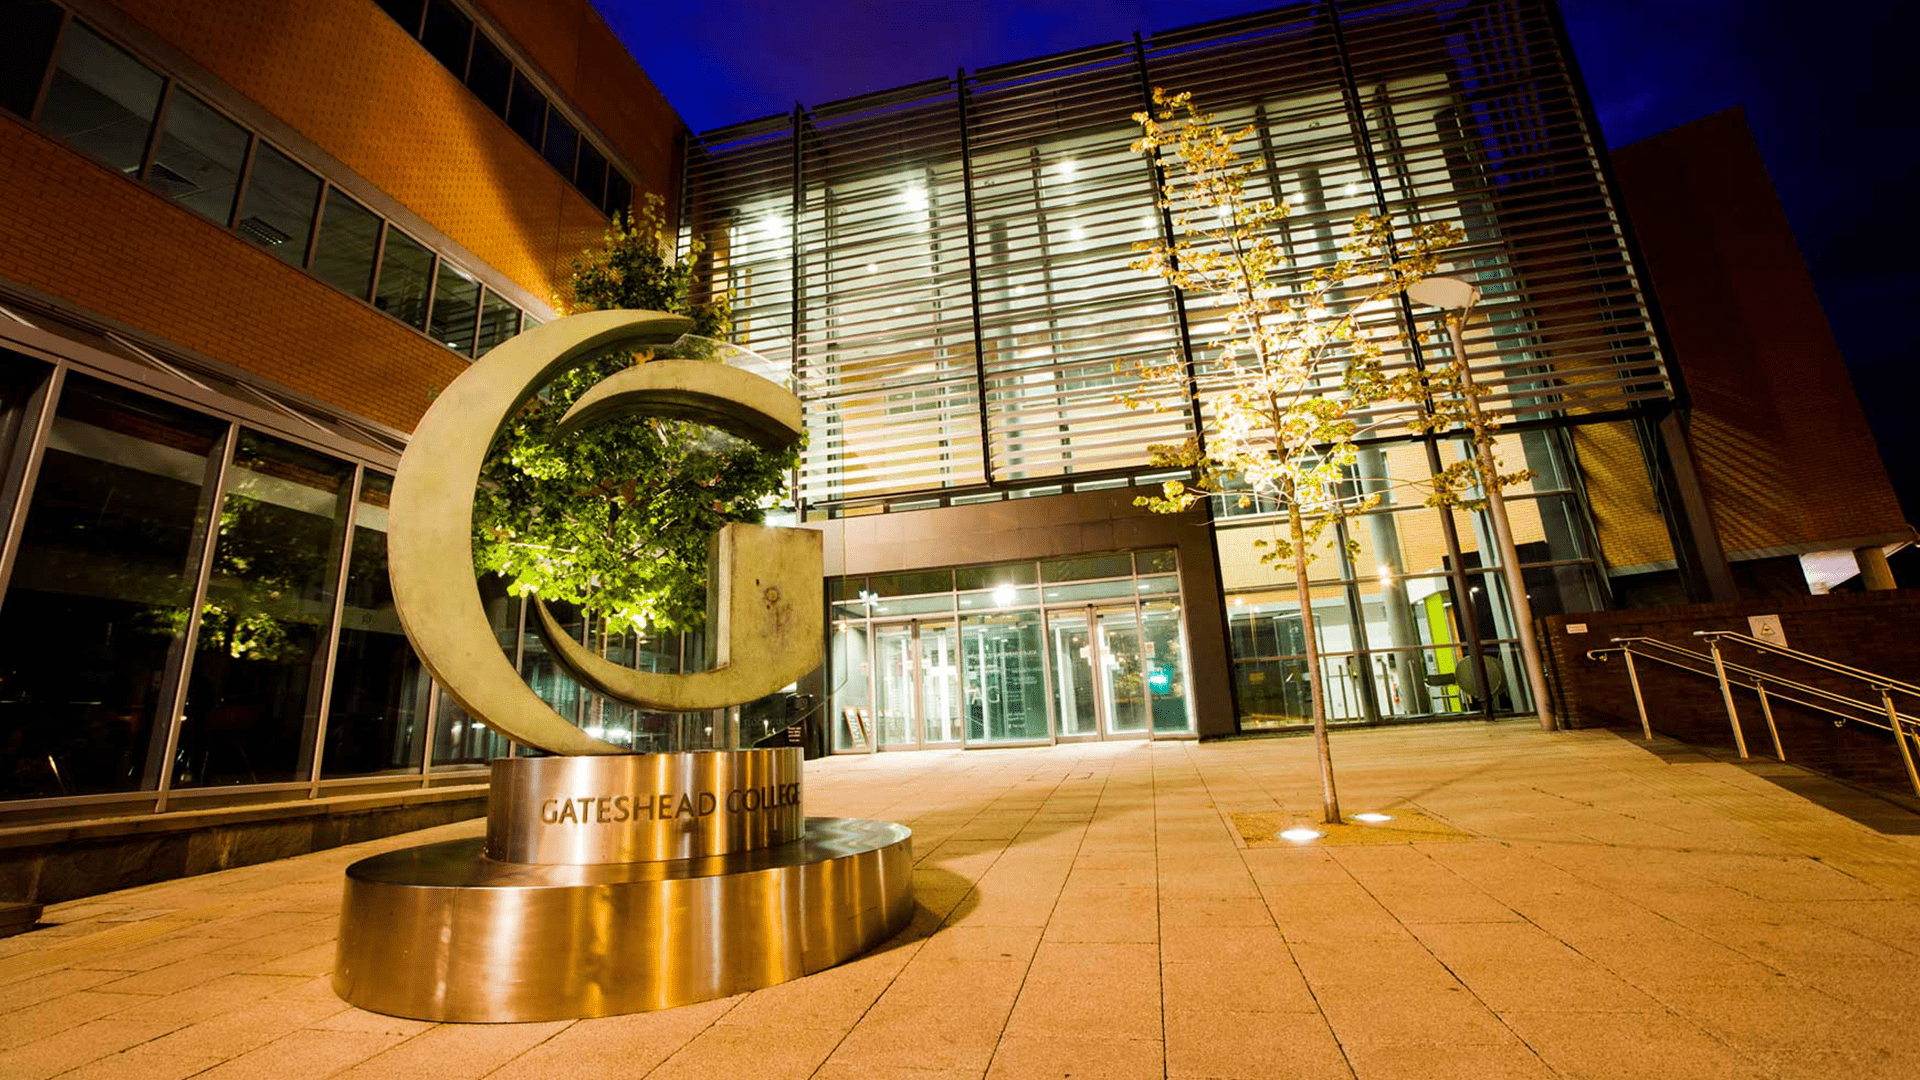 Gateshead College